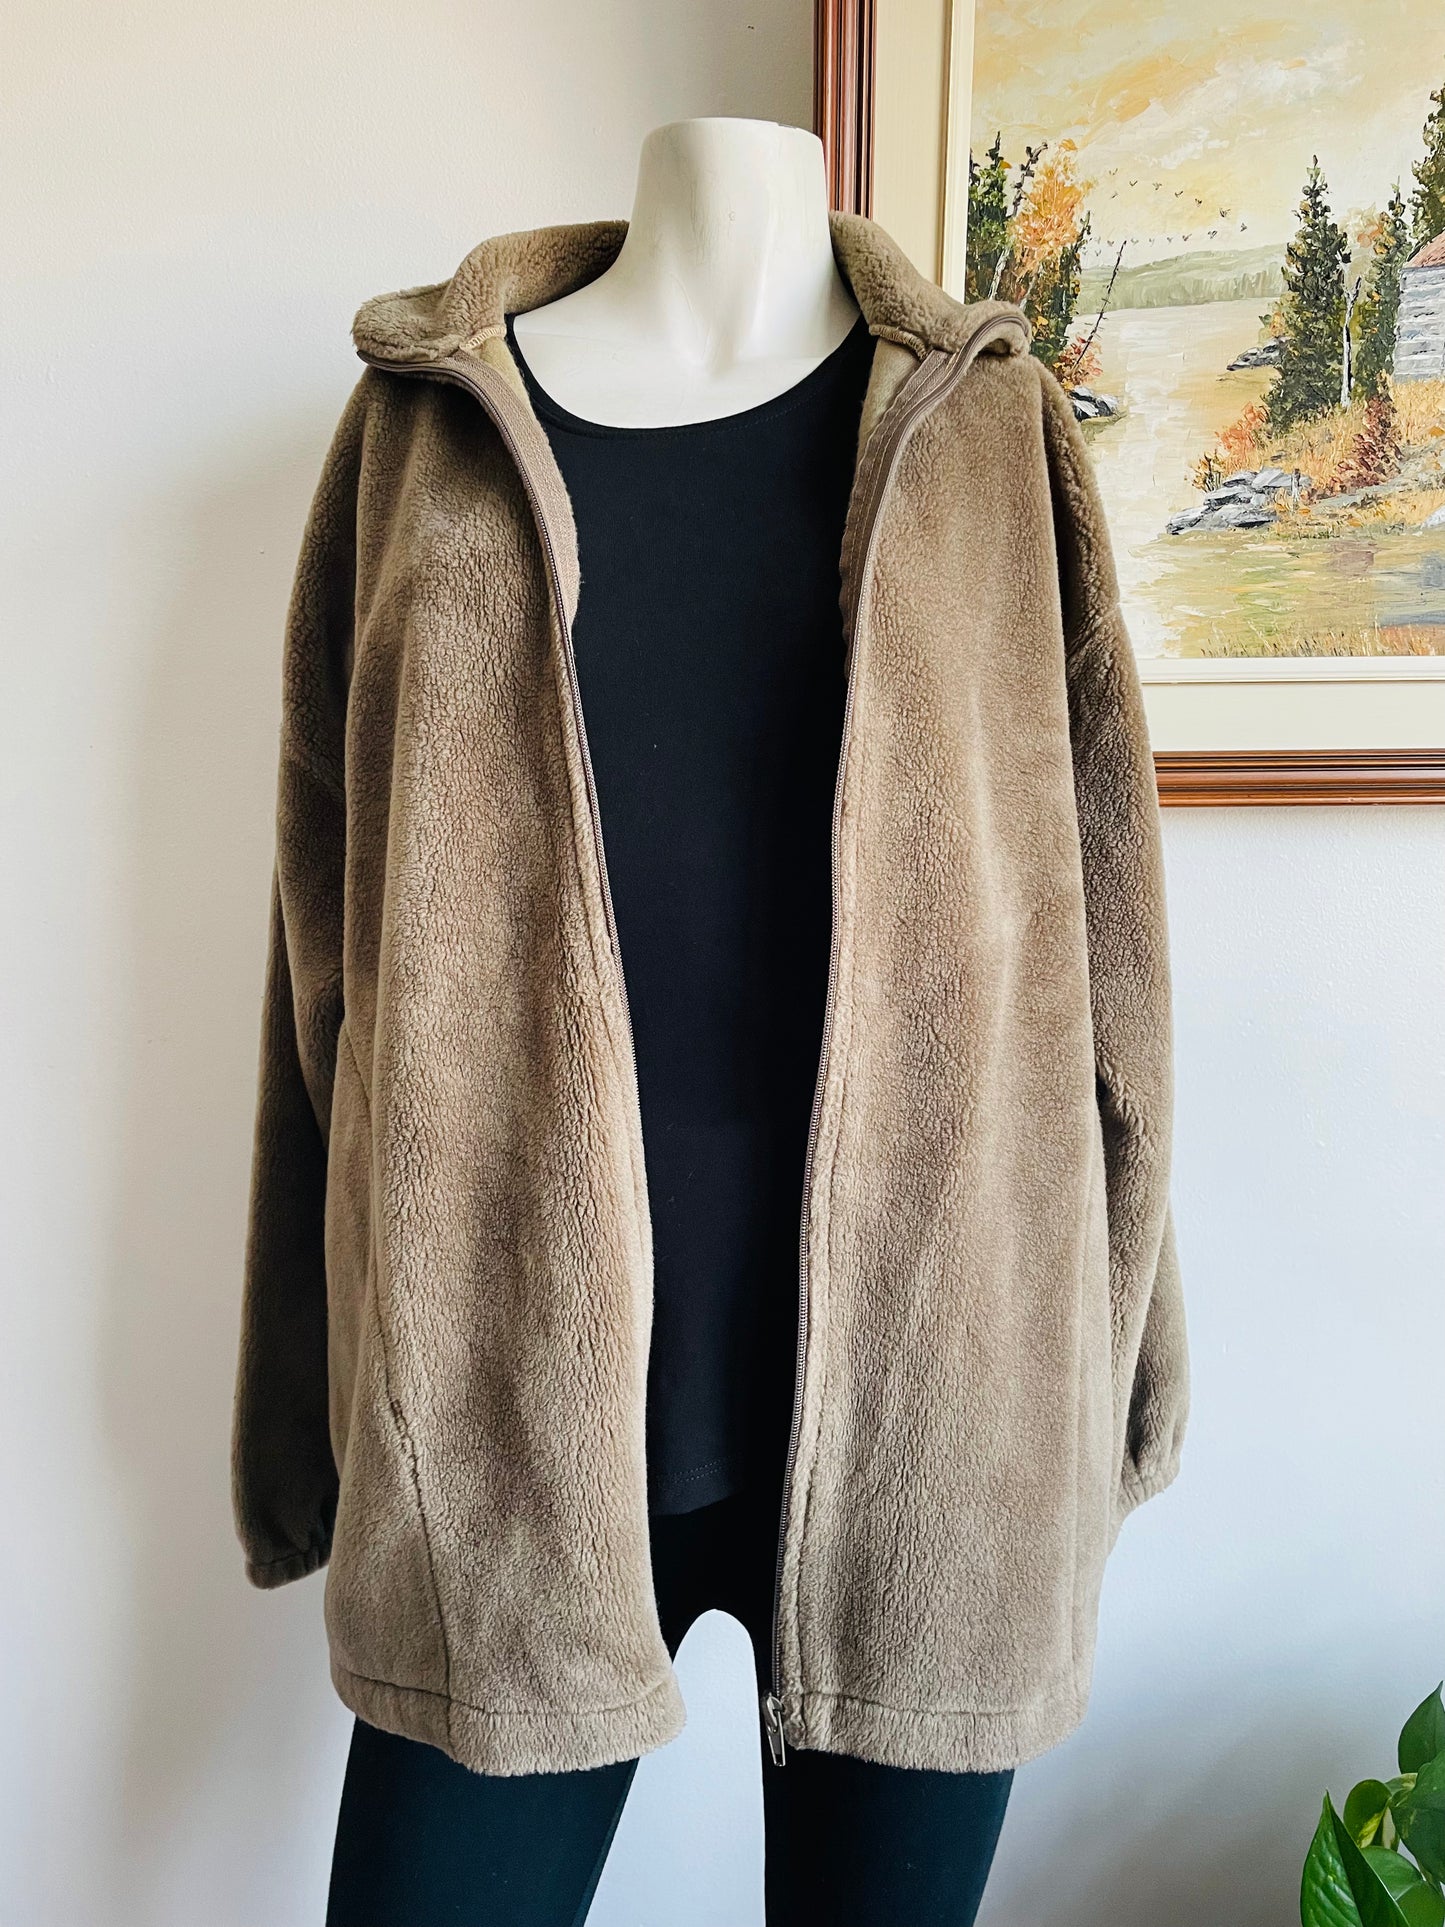 Cozy Brown Sherpa Fleece Zippered Sweater Jacket - Made in Canada